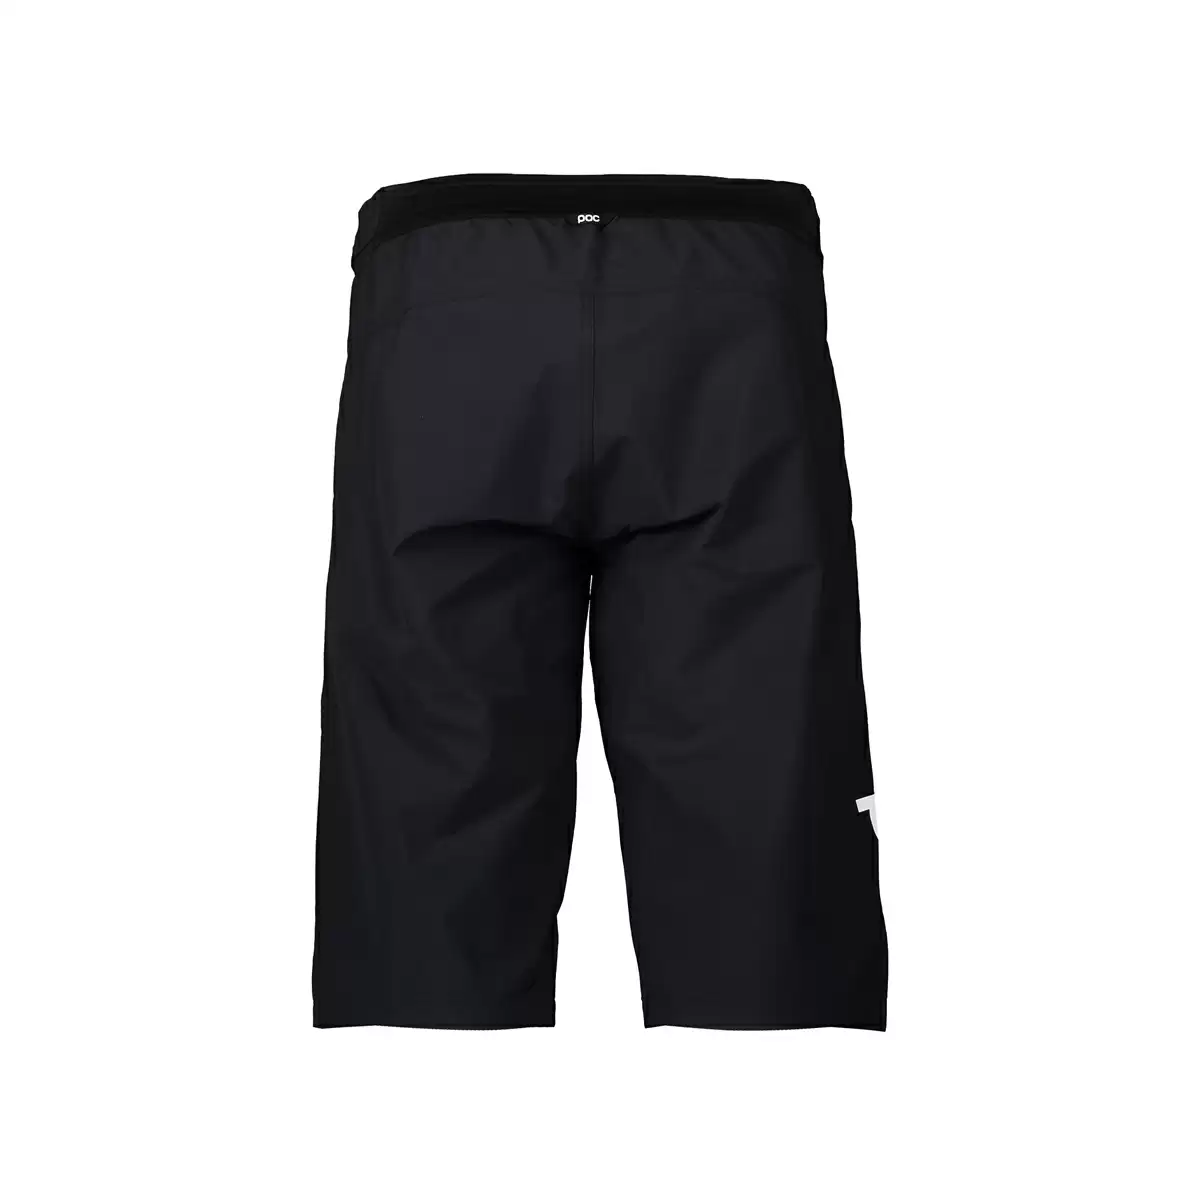 Essential Enduro Shorts black size L #1